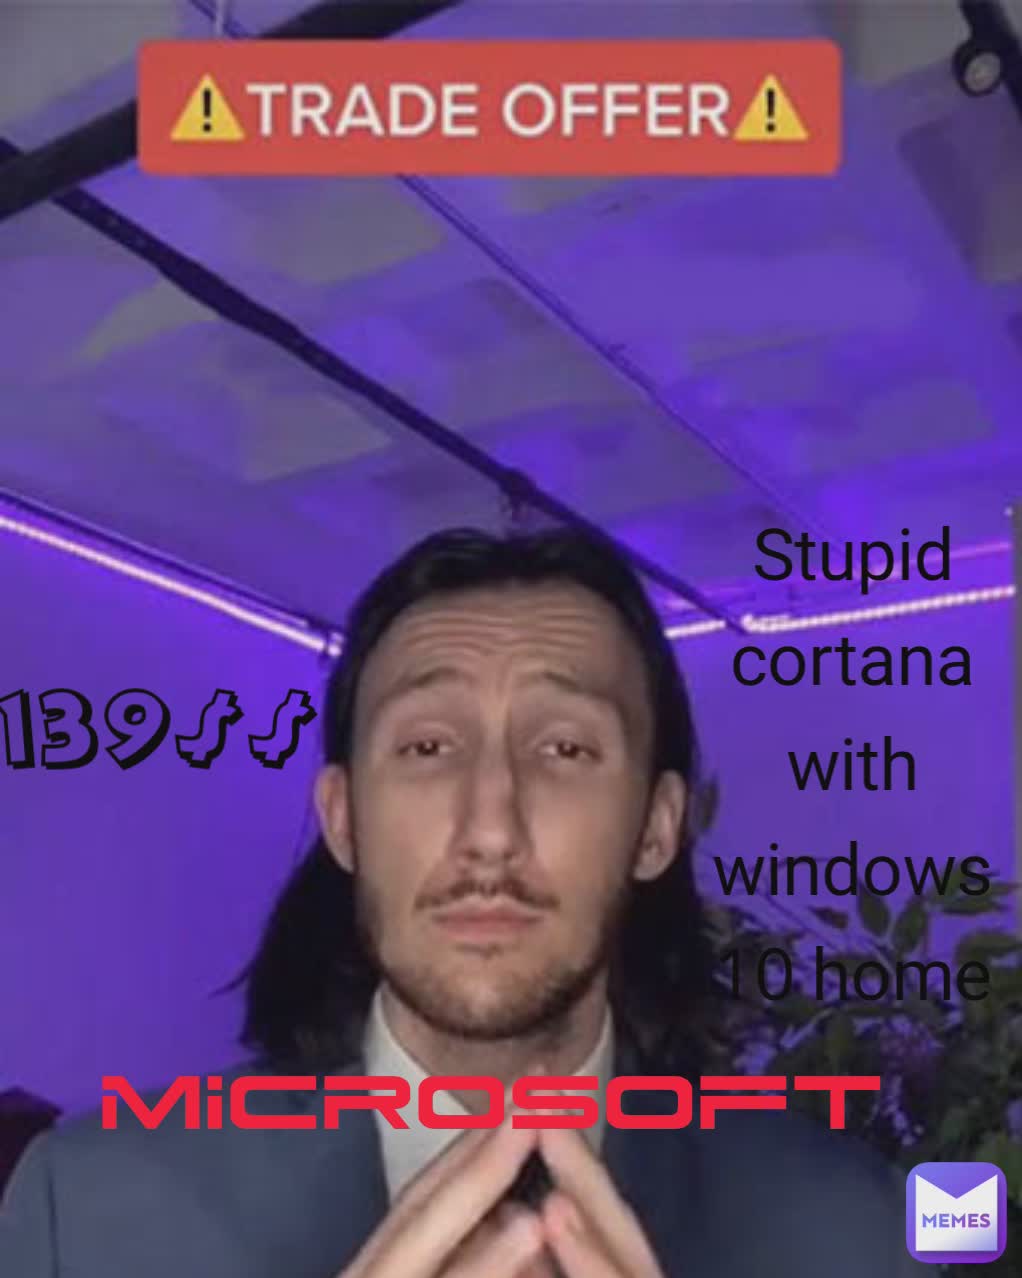 Type Text 139$$ Stupid cortana with windows 10 home MICROSOFT 